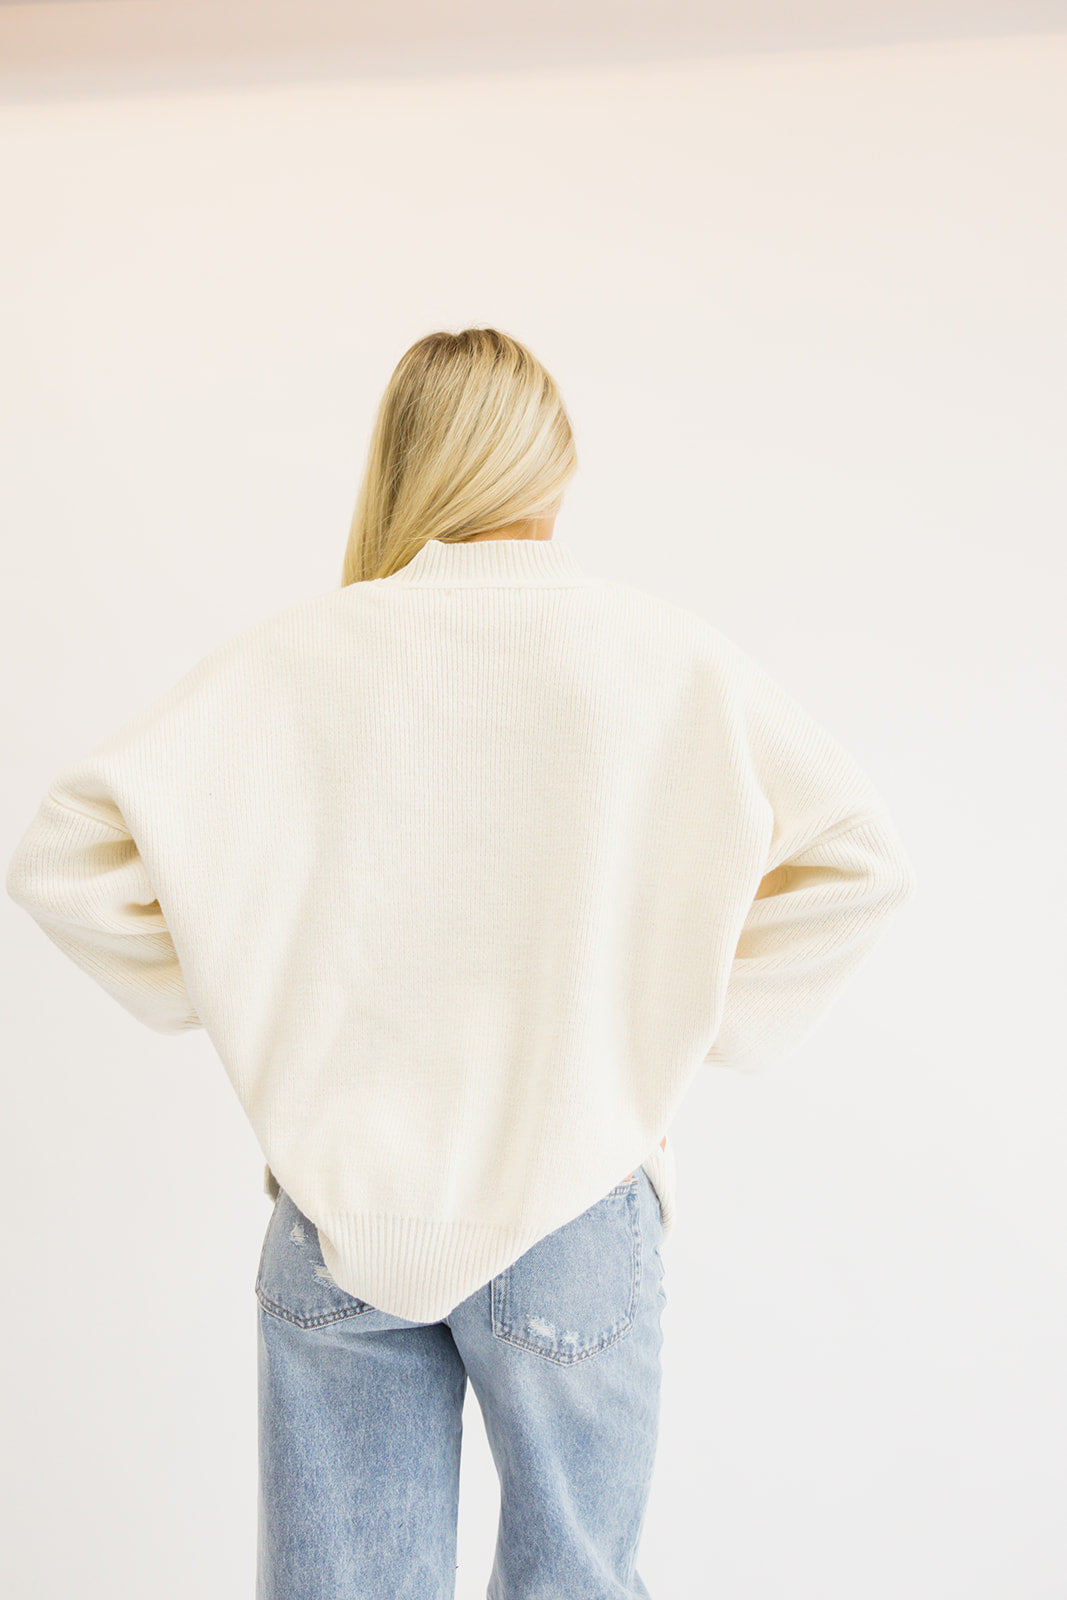 Emery Sweater // Ivory